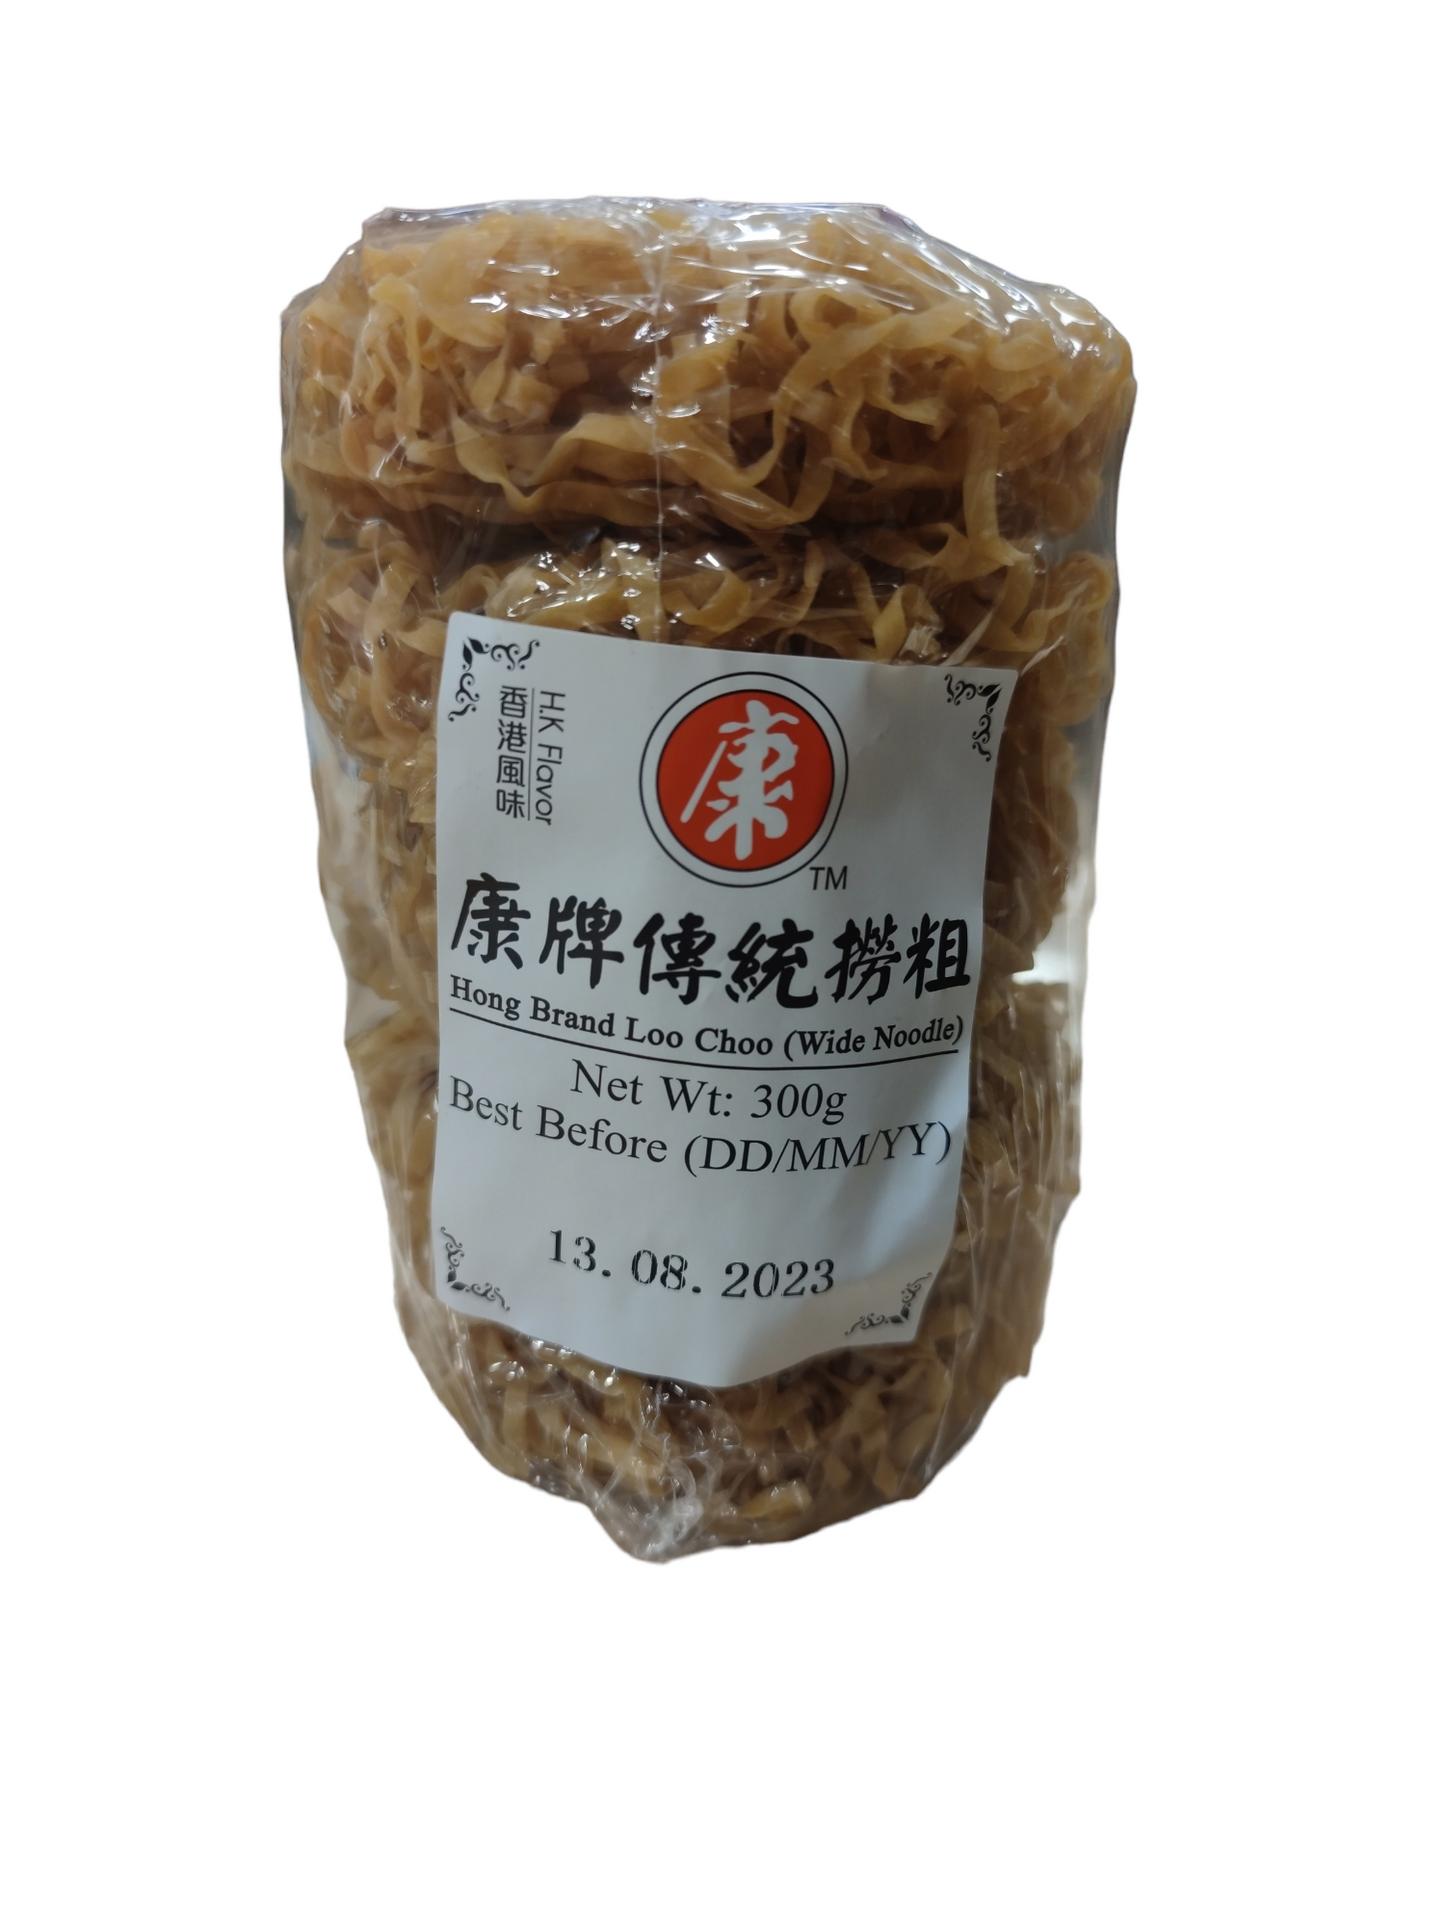 Hong Brand Loo Choo (Broad Noodles) 300g 康牌傳統撈粗